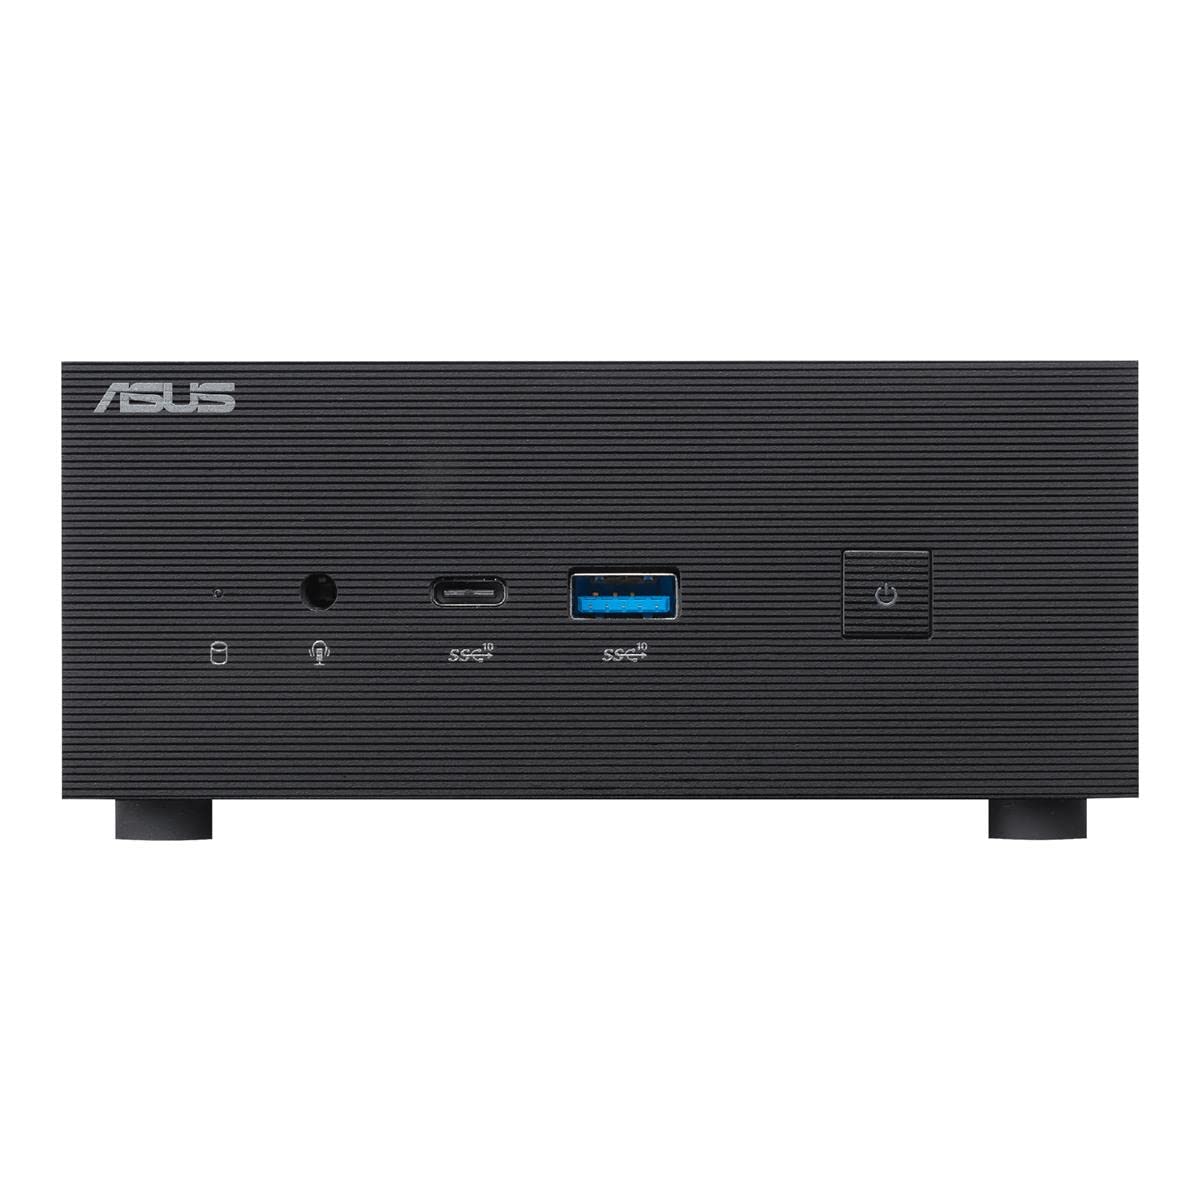 ASUS PN63-S1 Mini PC Barebone with Intel Core i5-11300H Mobile Processor, up to 64GB DDR4 RAM, Triple Storge Design, WiFi 6, Bluetooth, USB-C with VESA Mount